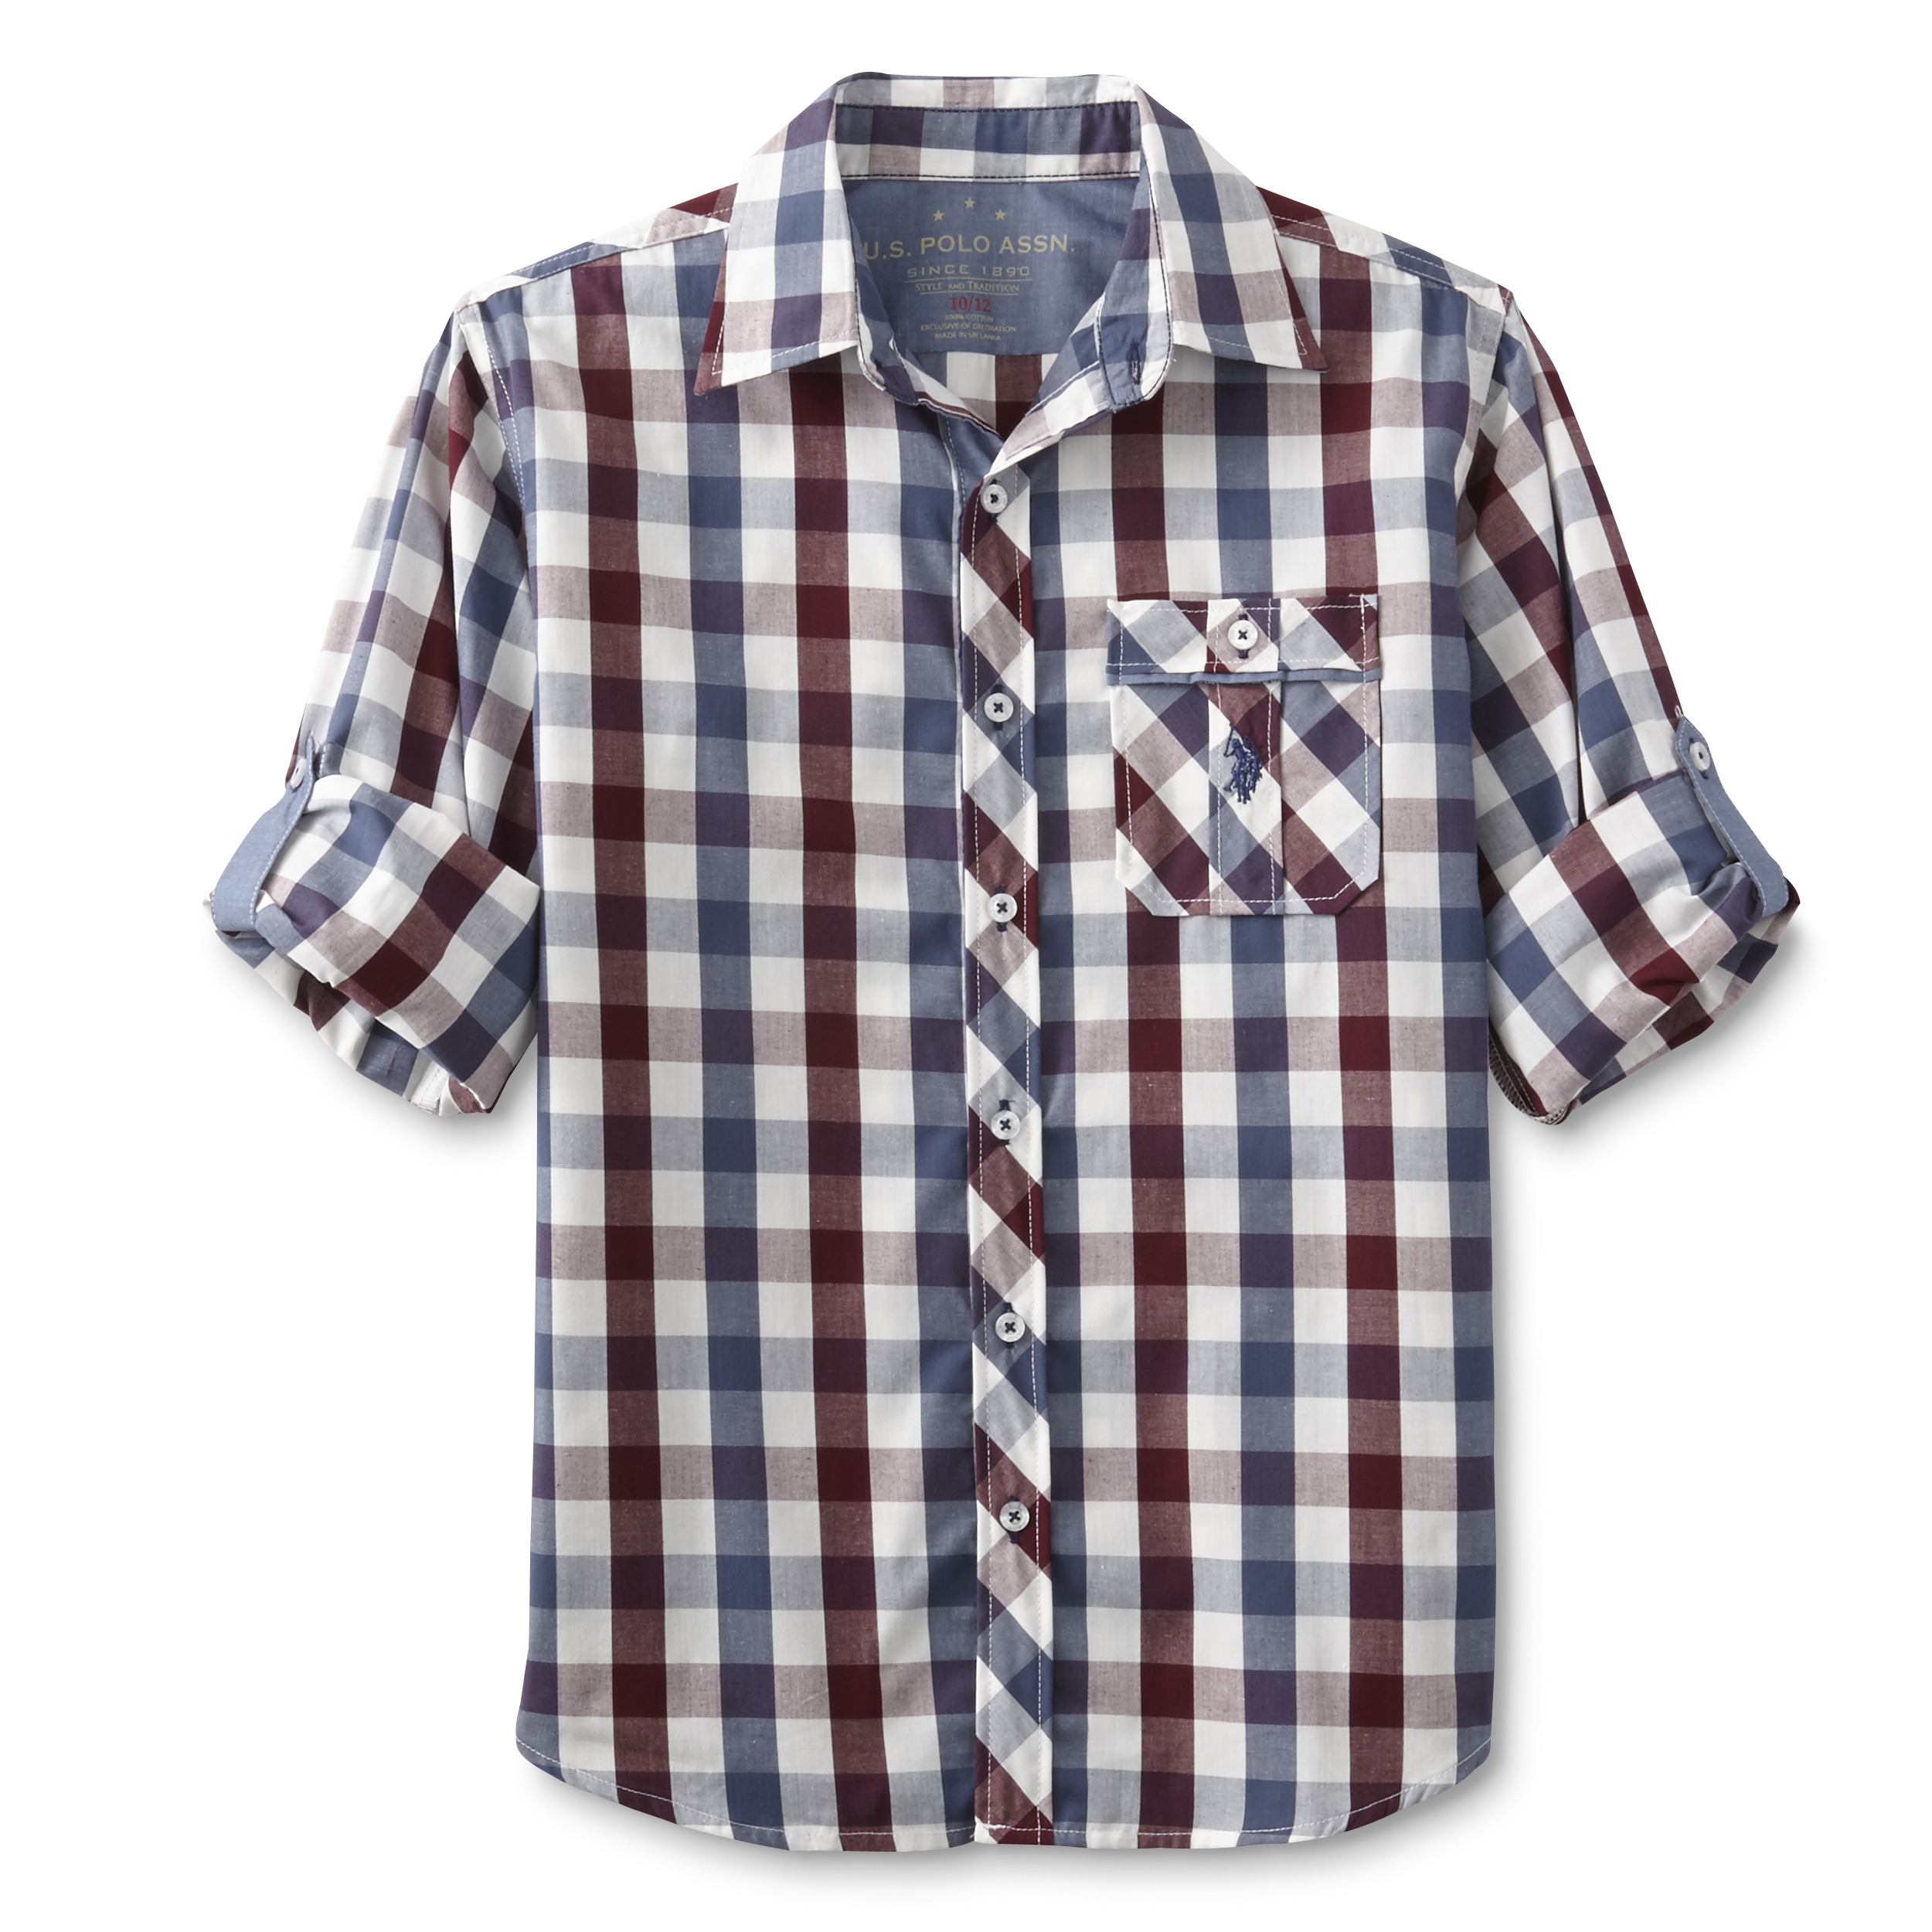 U.S. Polo Assn. Boy's Button-Front Shirt - Plaid